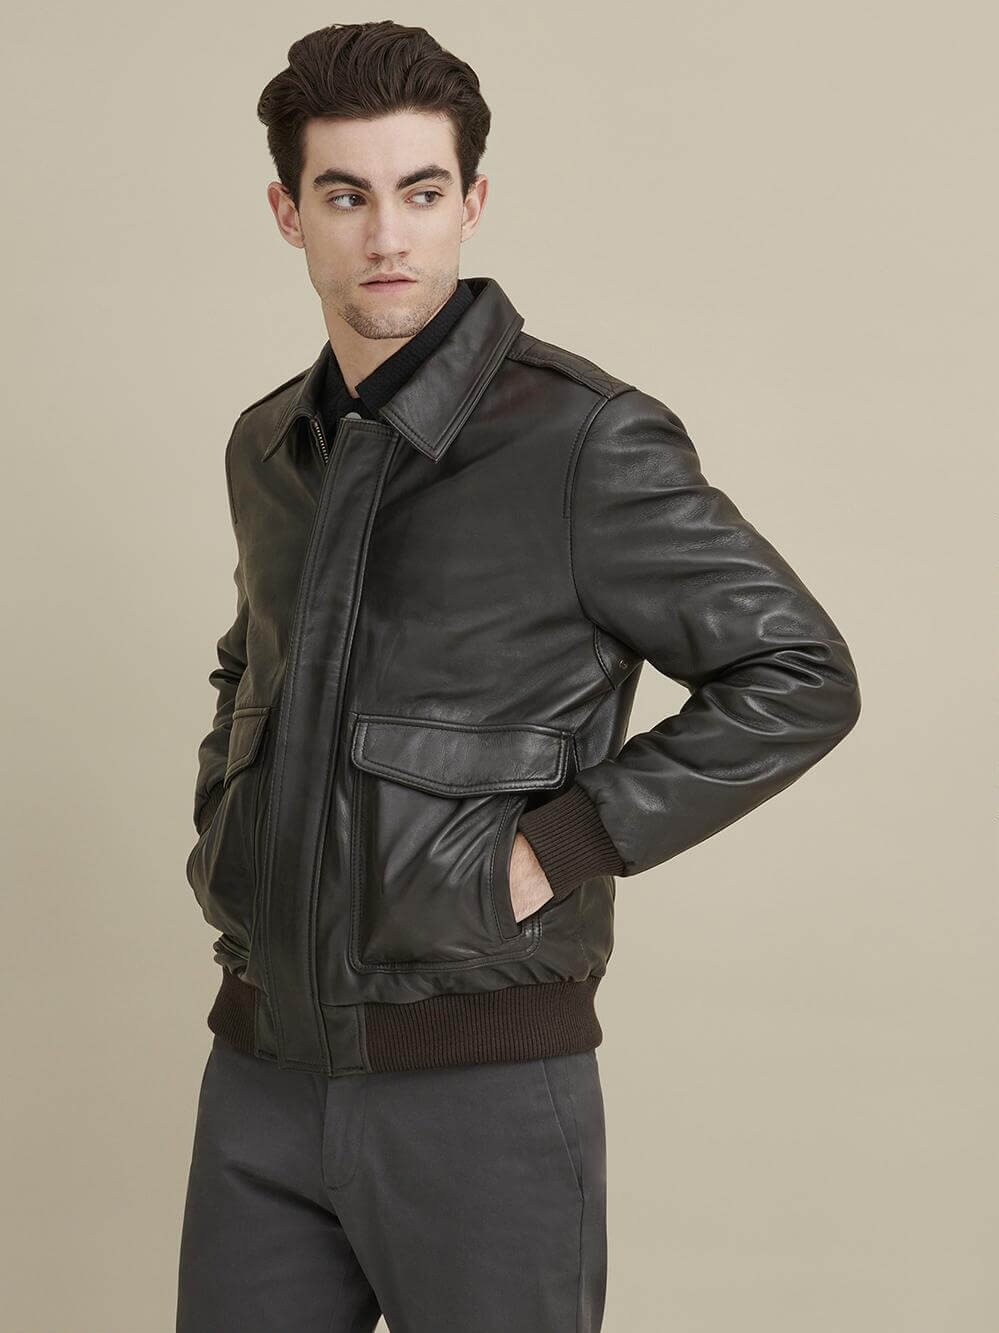 Stylish Mens black leather biker jacket